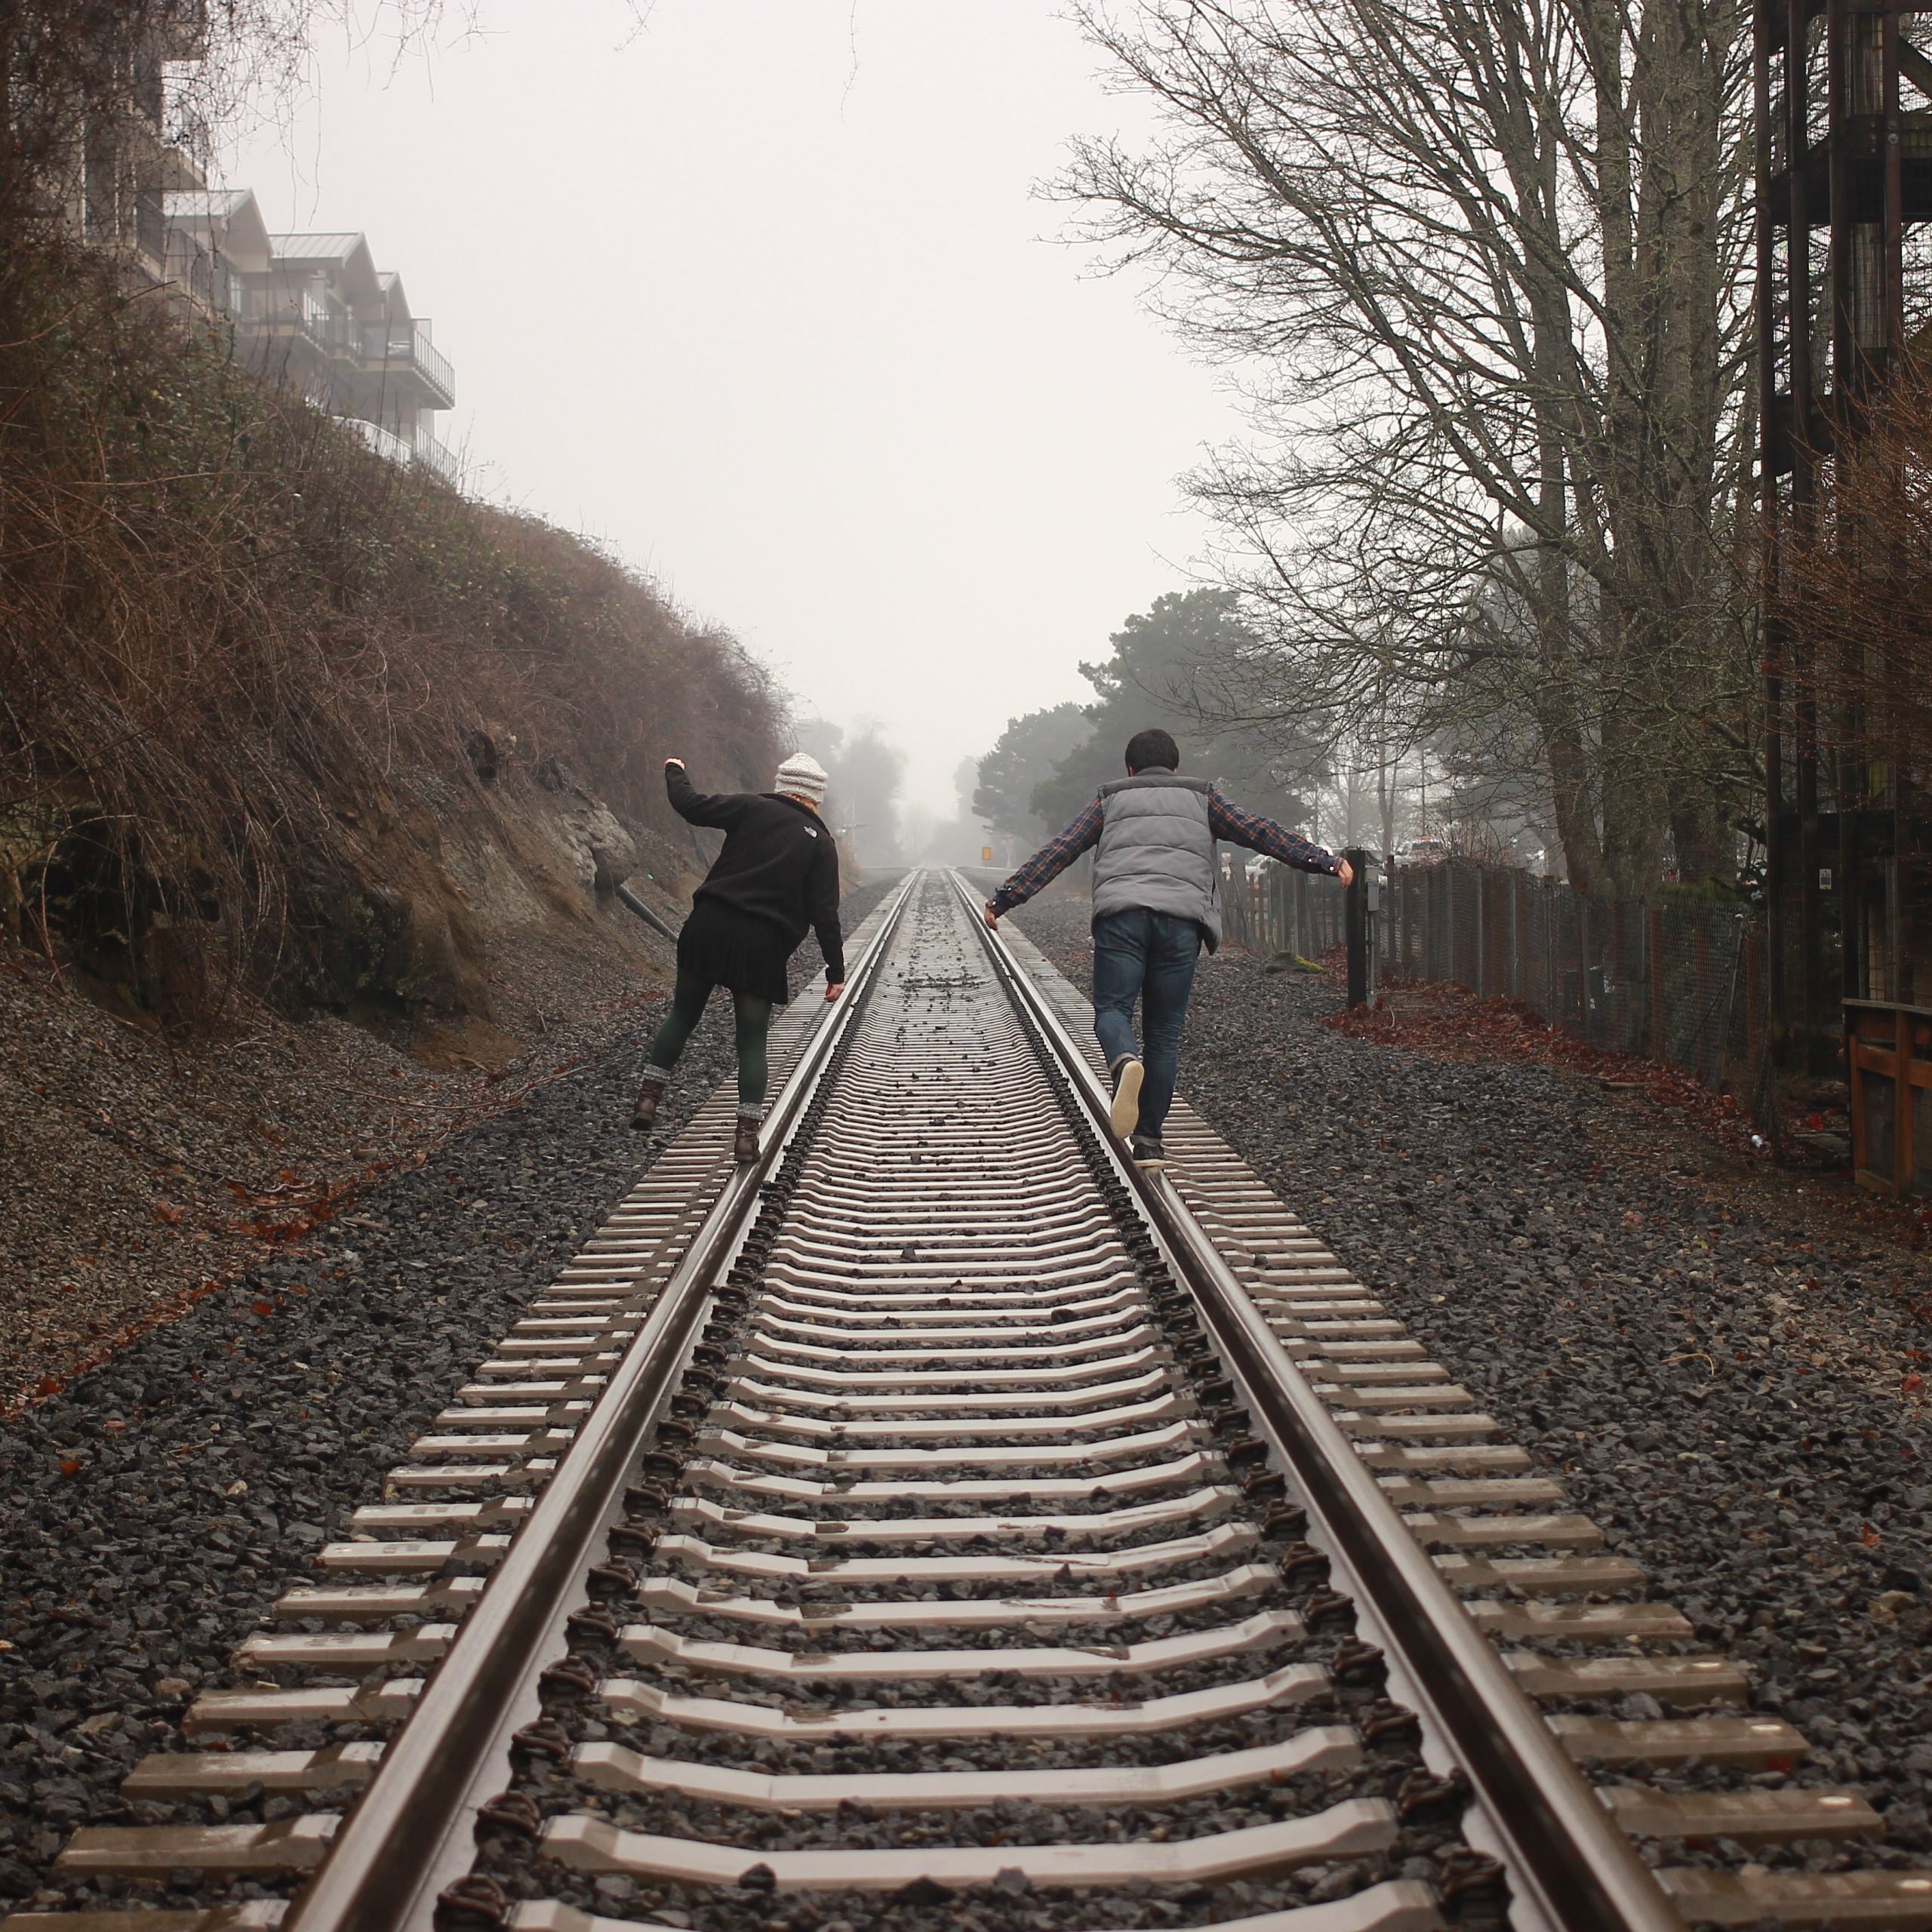 couple walking on train tracks in the mist